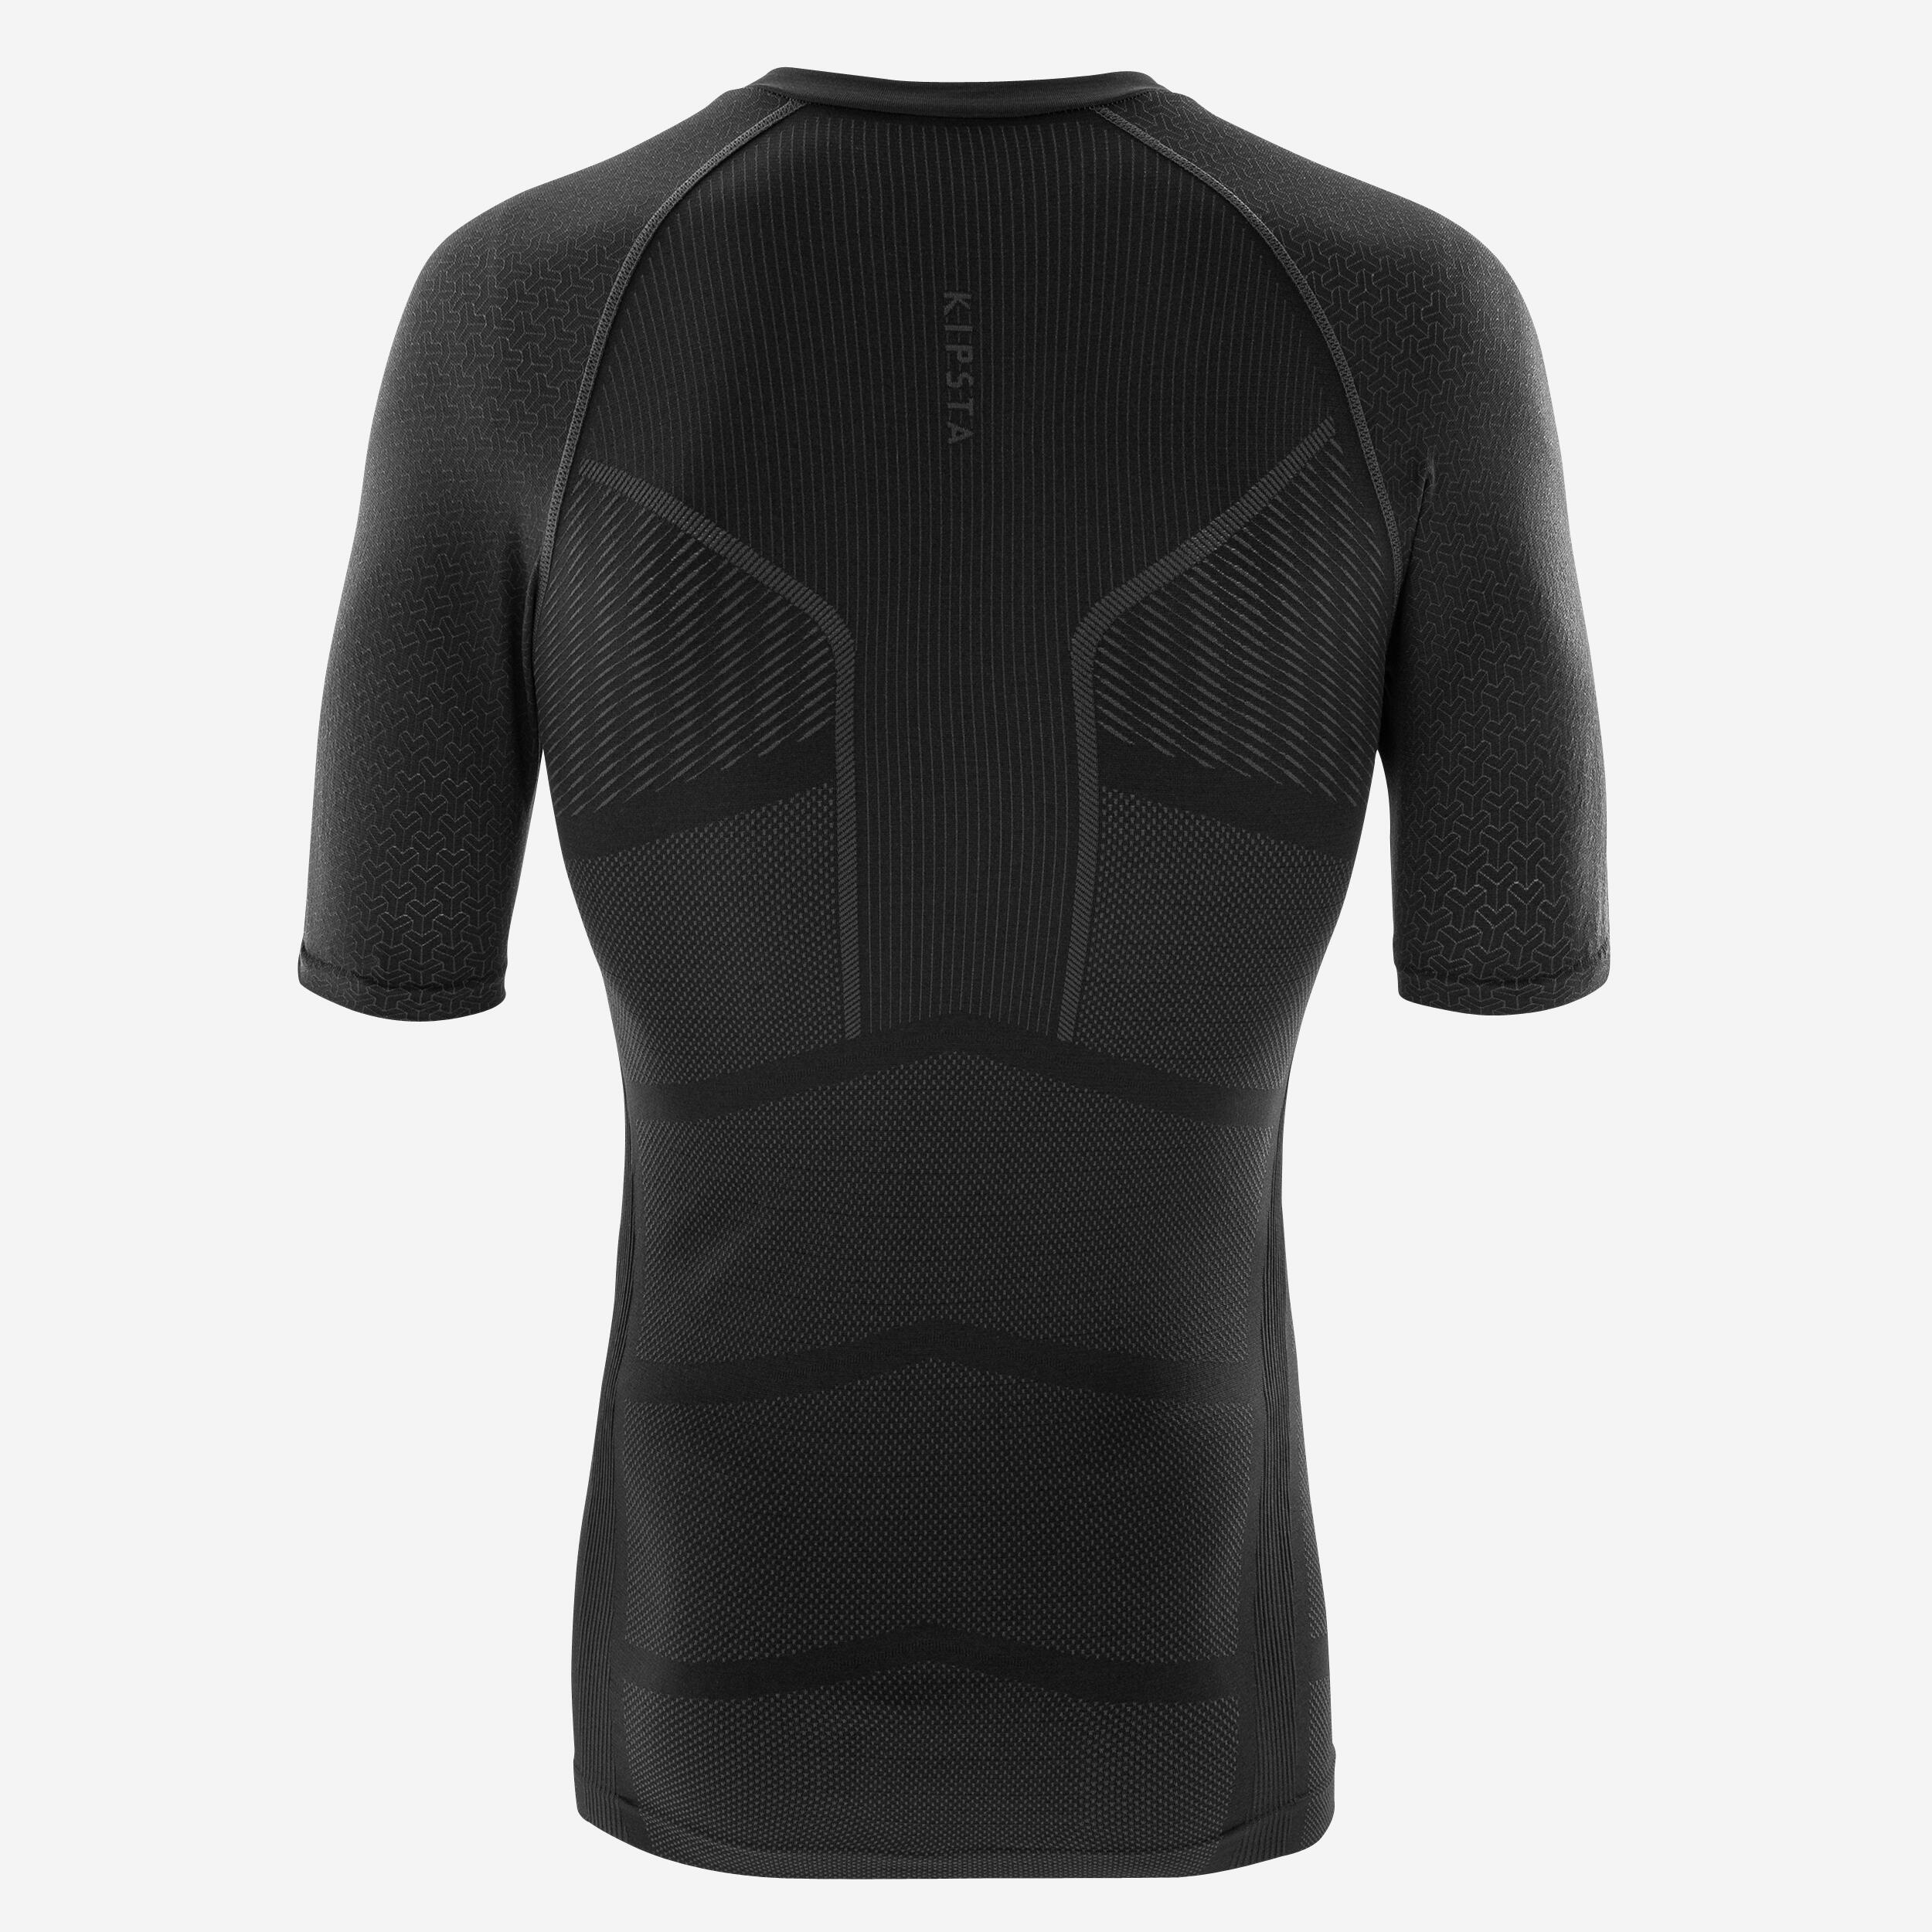 Men's Short-Sleeved Thermal Base Layer Top - Keepdry 500 Black - [EN]  smoked black, [EN] graphite grey - Kipsta - Decathlon